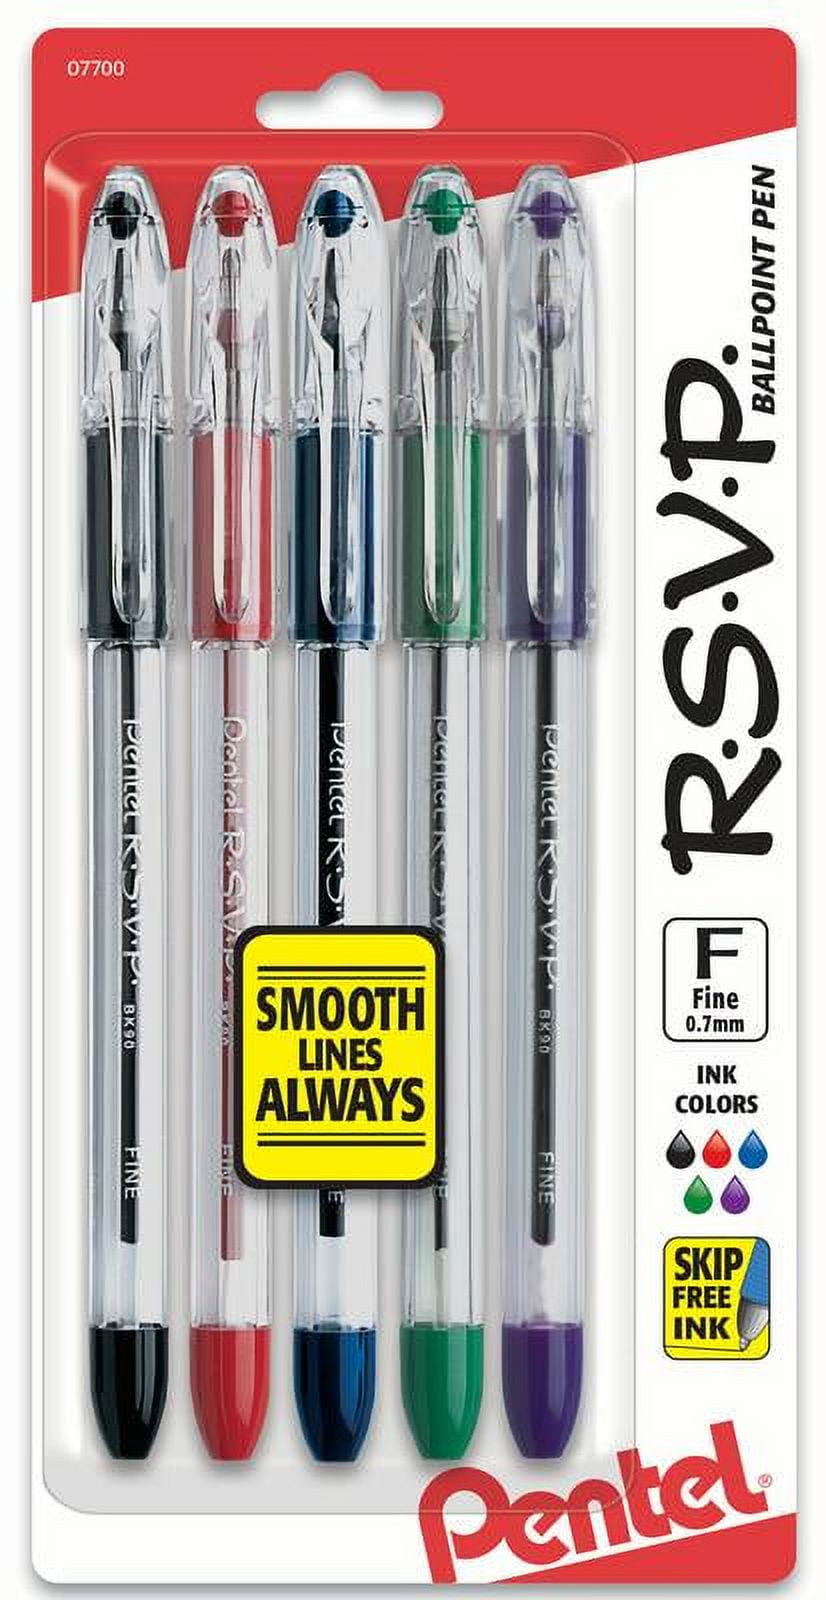 Pentel RSVP Ballpoint Pens